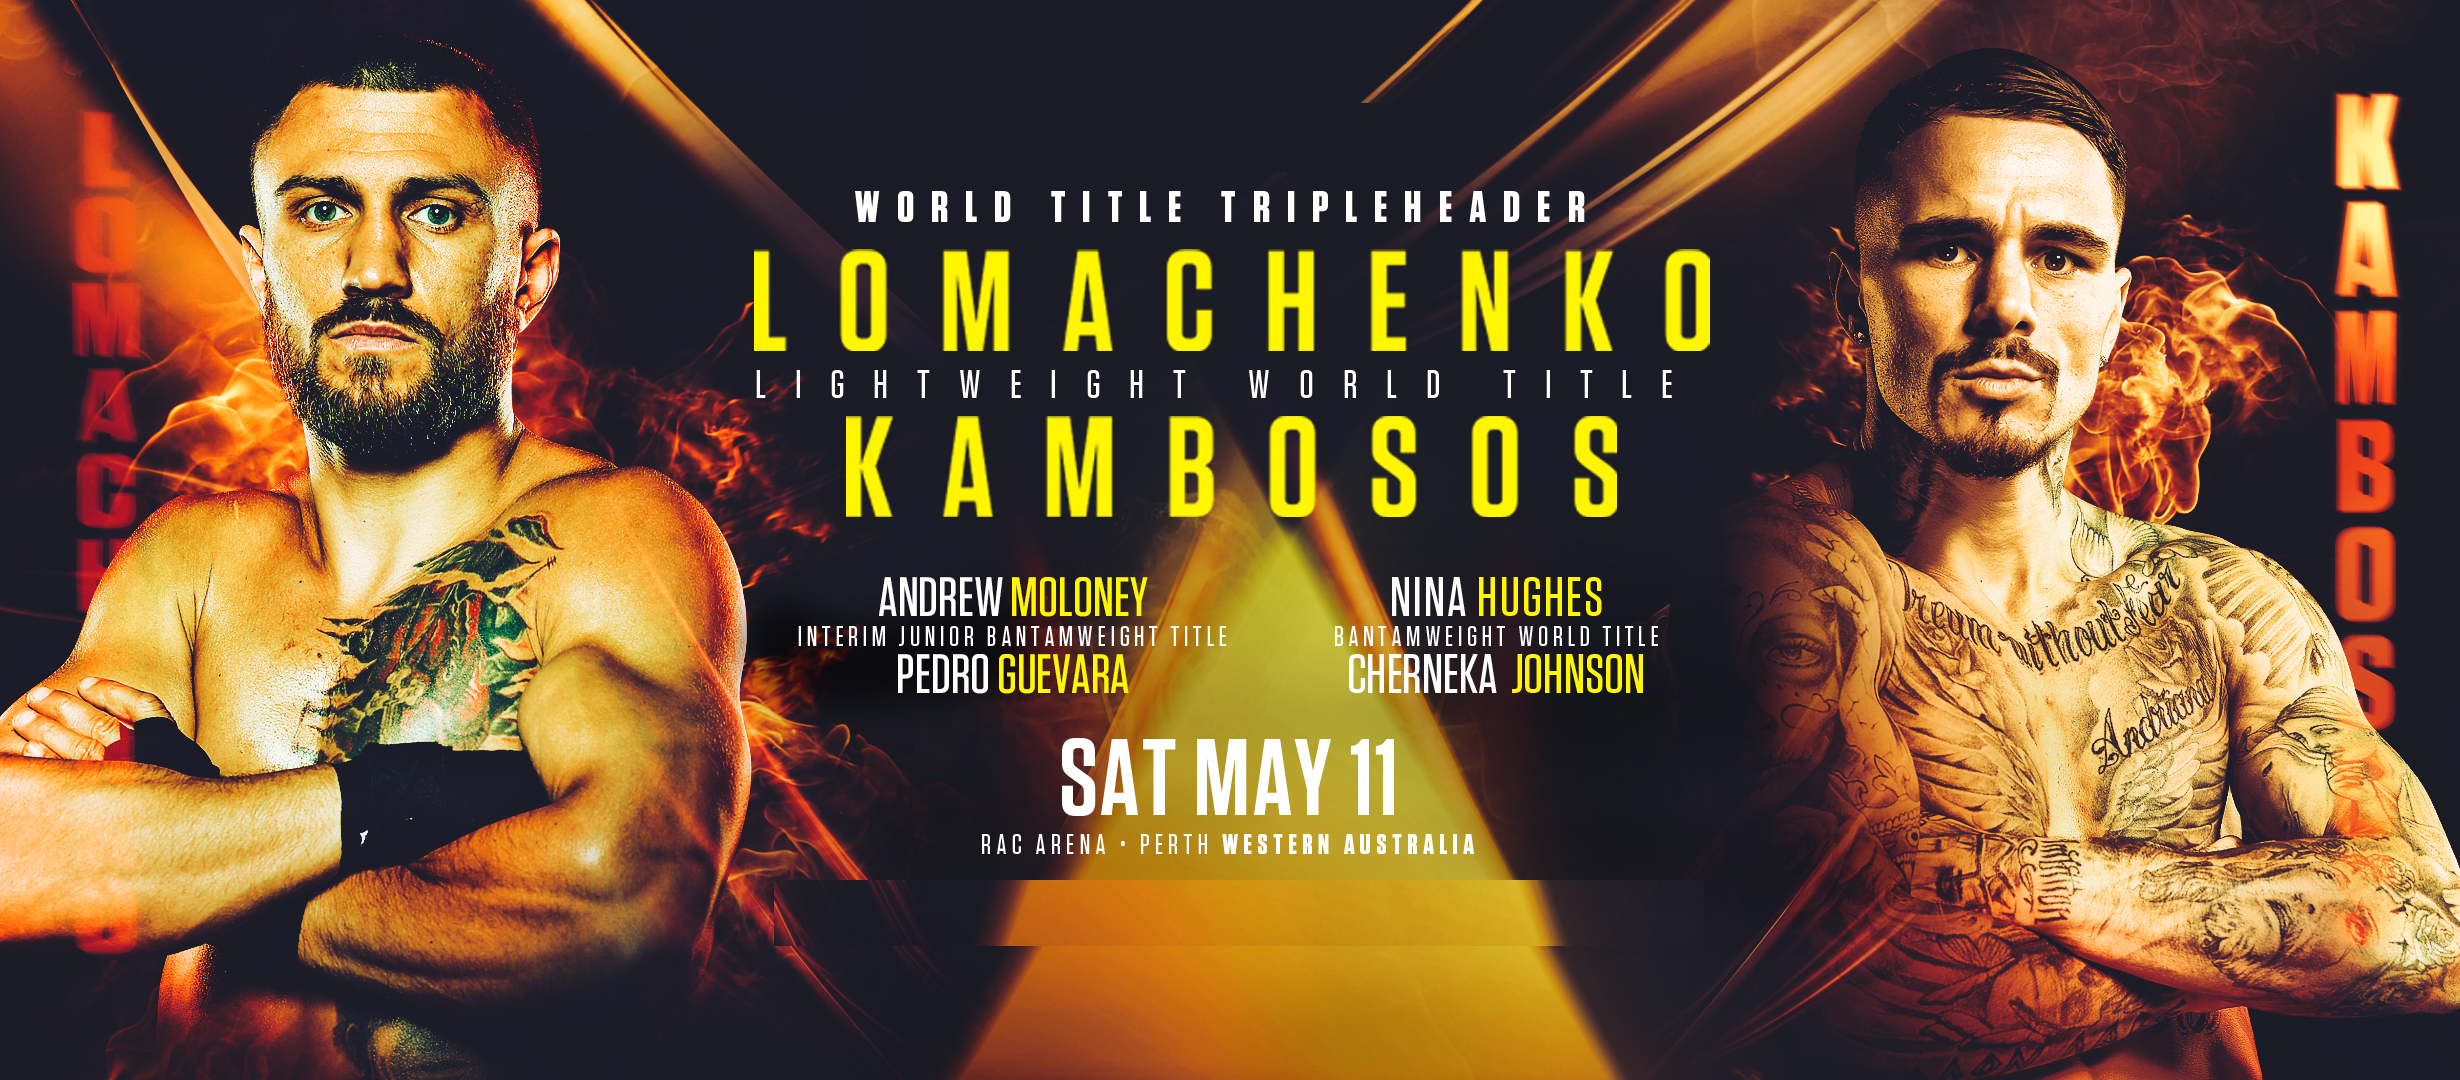 Lomachenko vs Kambosos Live Stream, Start Time, Fight Card & TV Channel Info